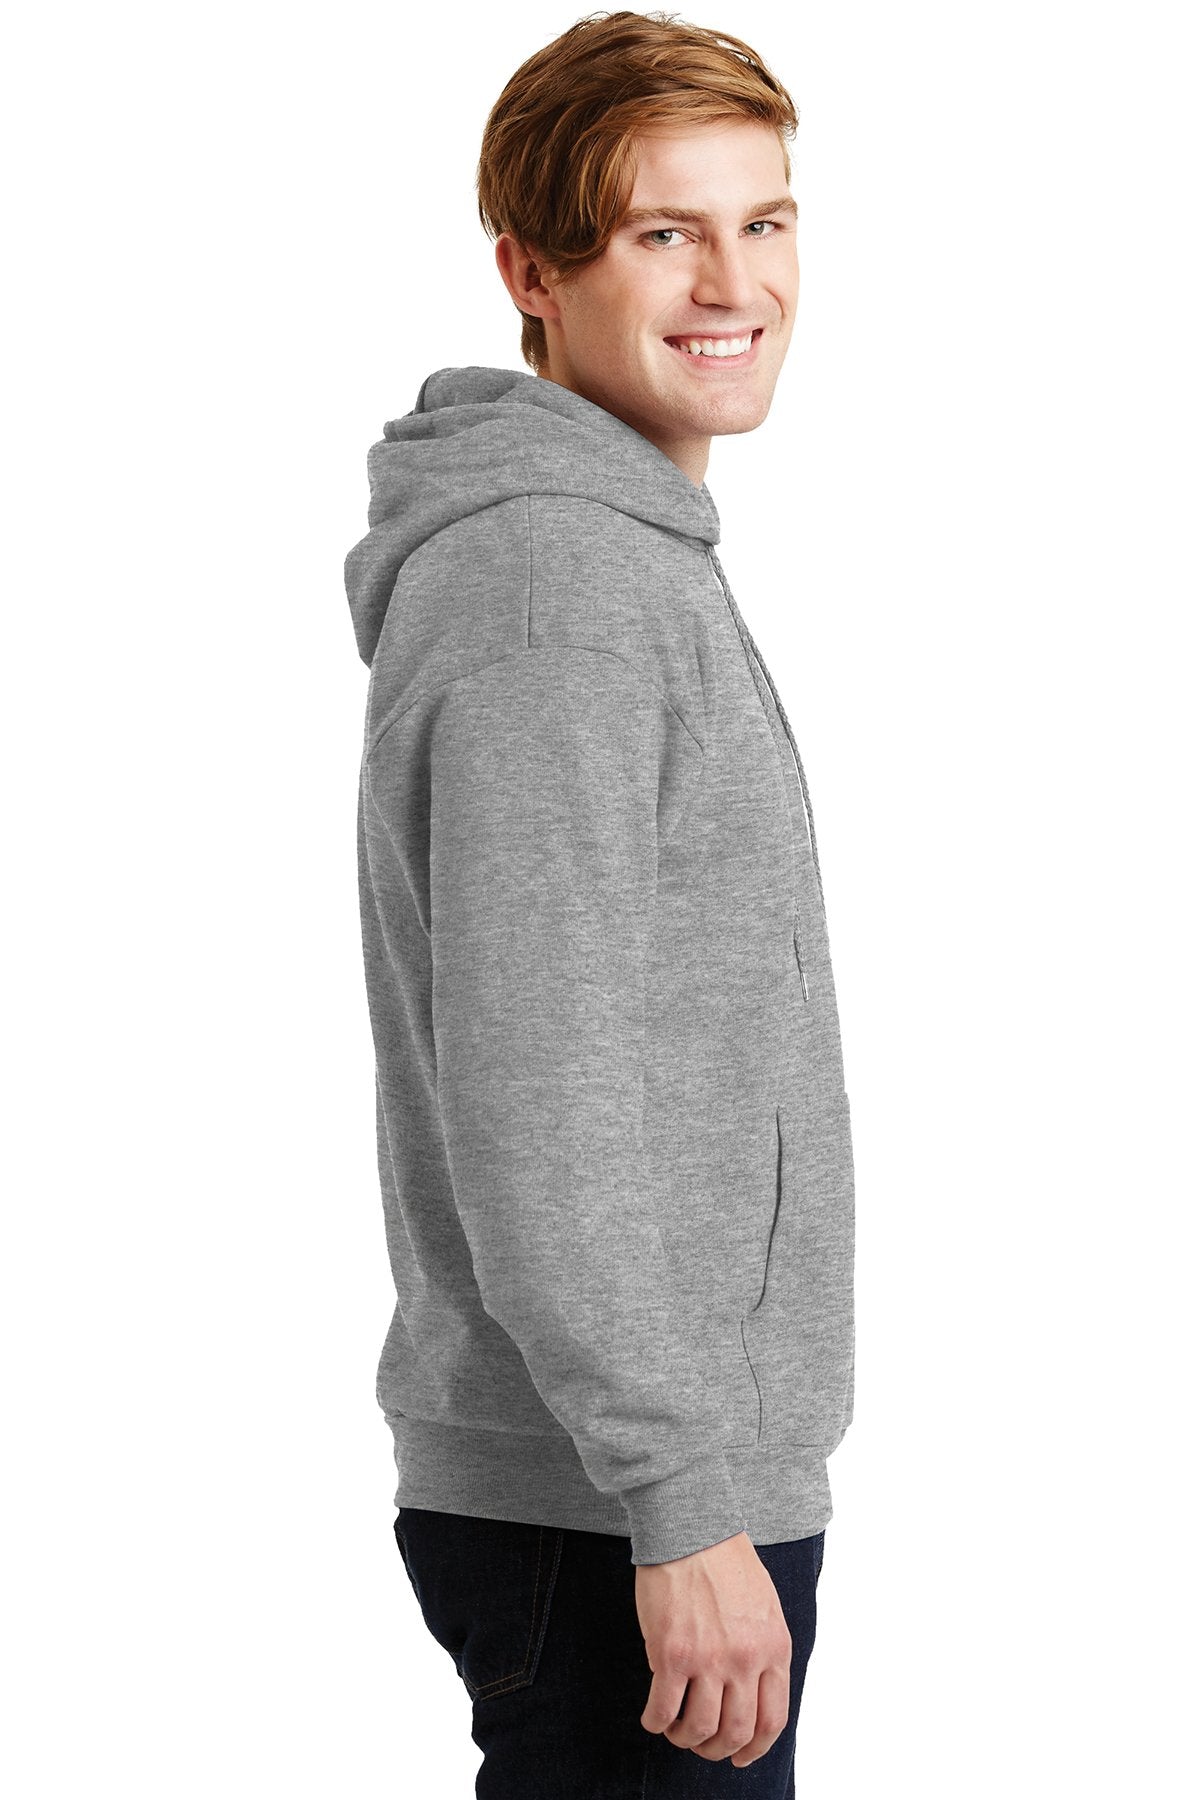 Hanes Ecosmart Pullover Hooded Sweatshirt P170 Light Steel